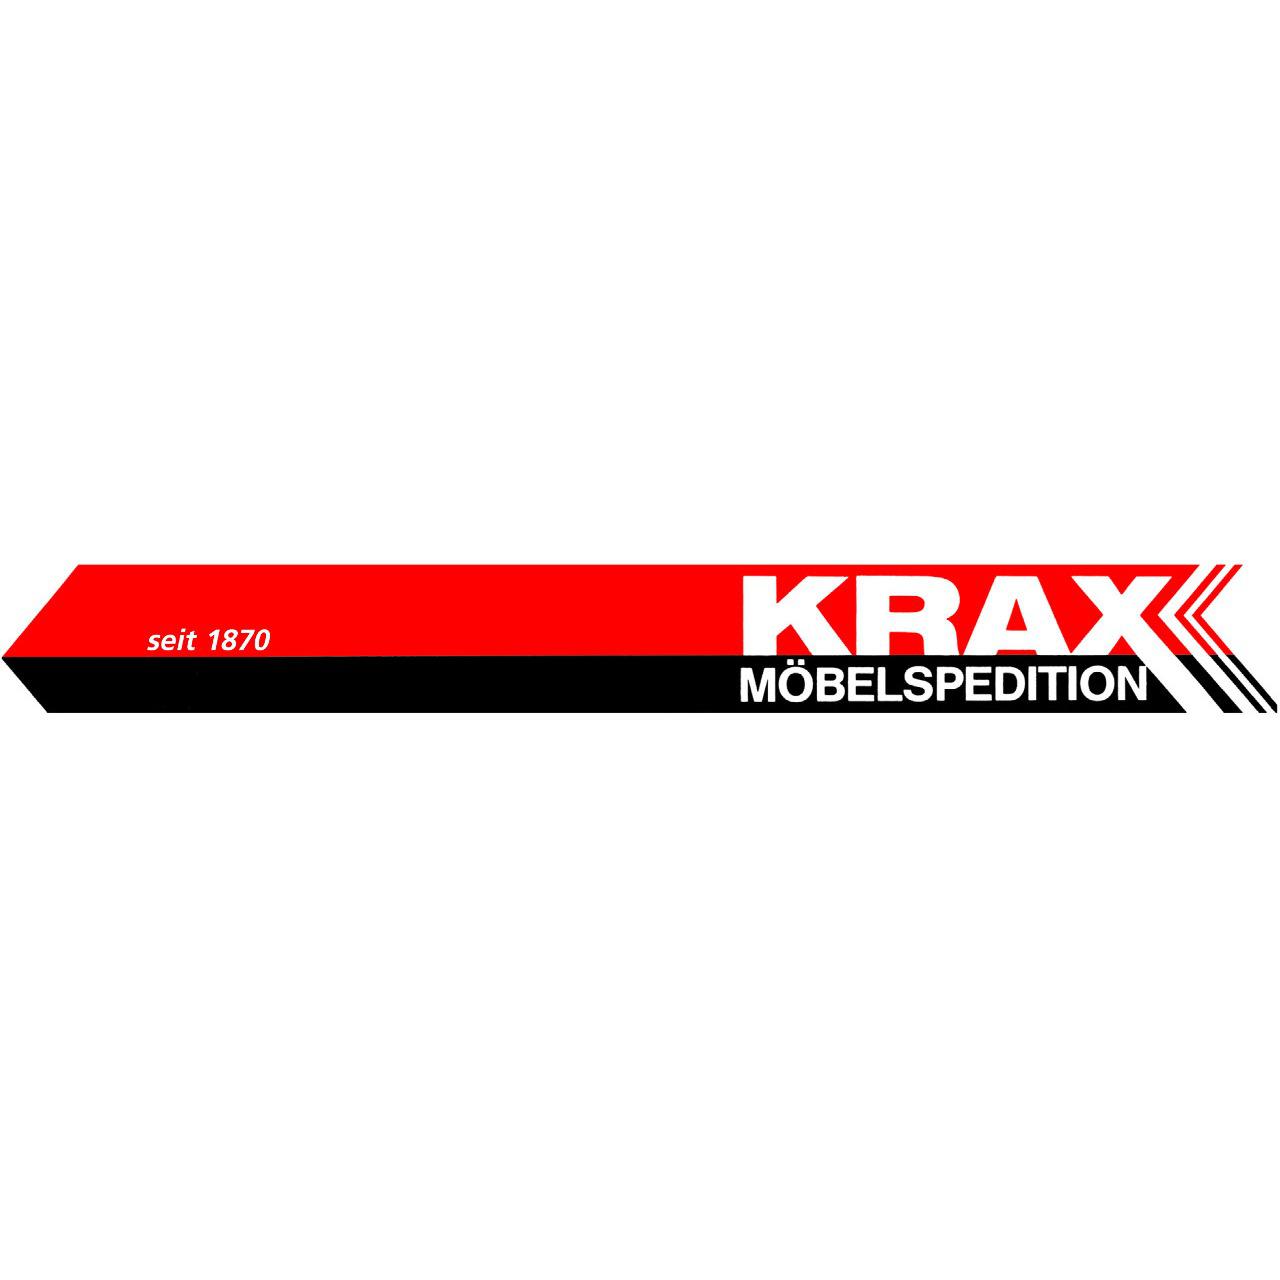 Johann Krax GmbH in Dortmund - Logo